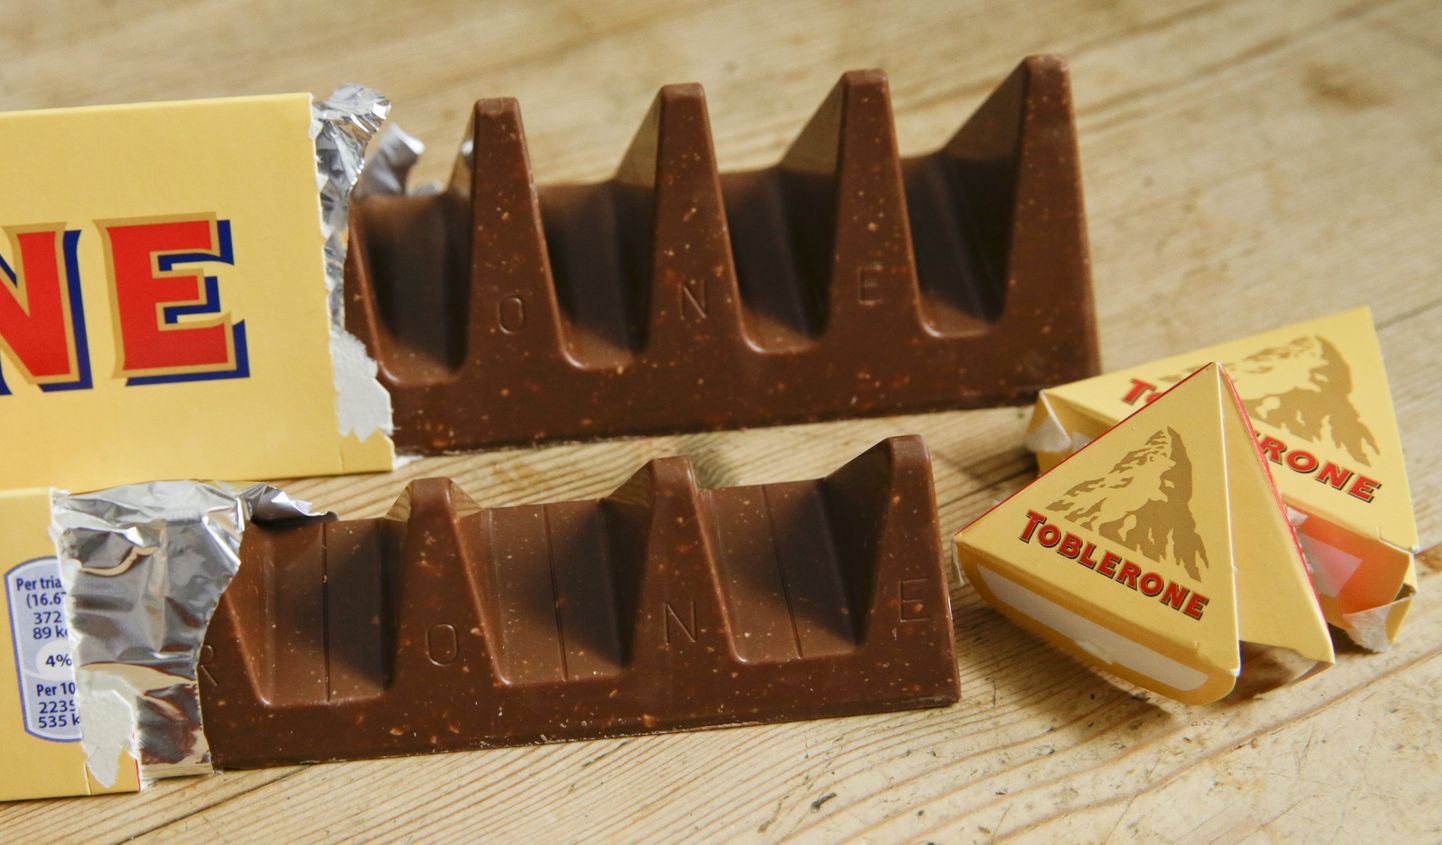 Шоколад Toblerone. Иллюстративное фото.